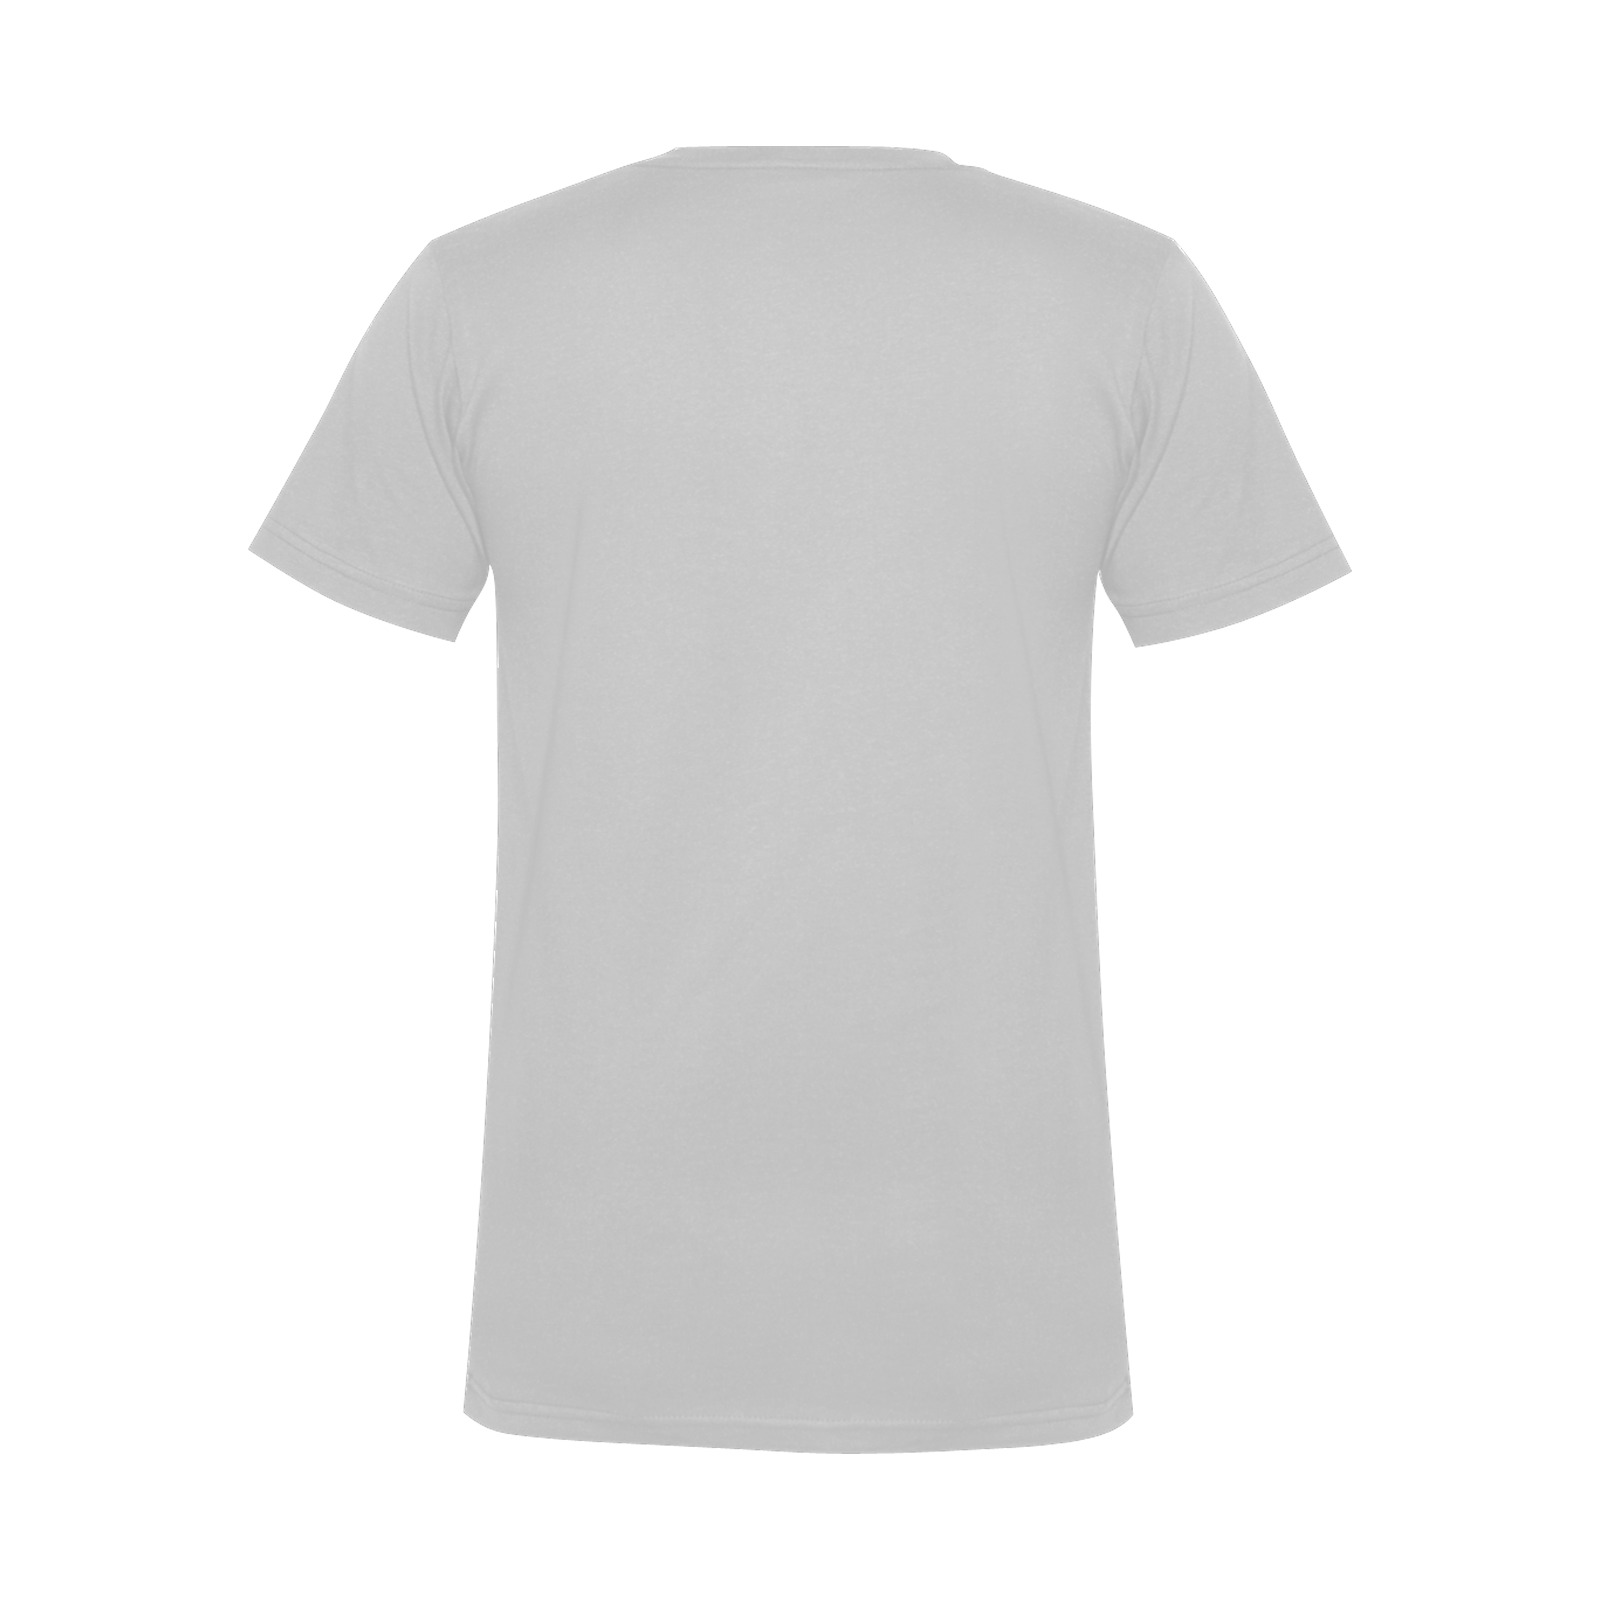 Space Cream Cone Men's V-Neck T-shirt (USA Size) (Model T10)